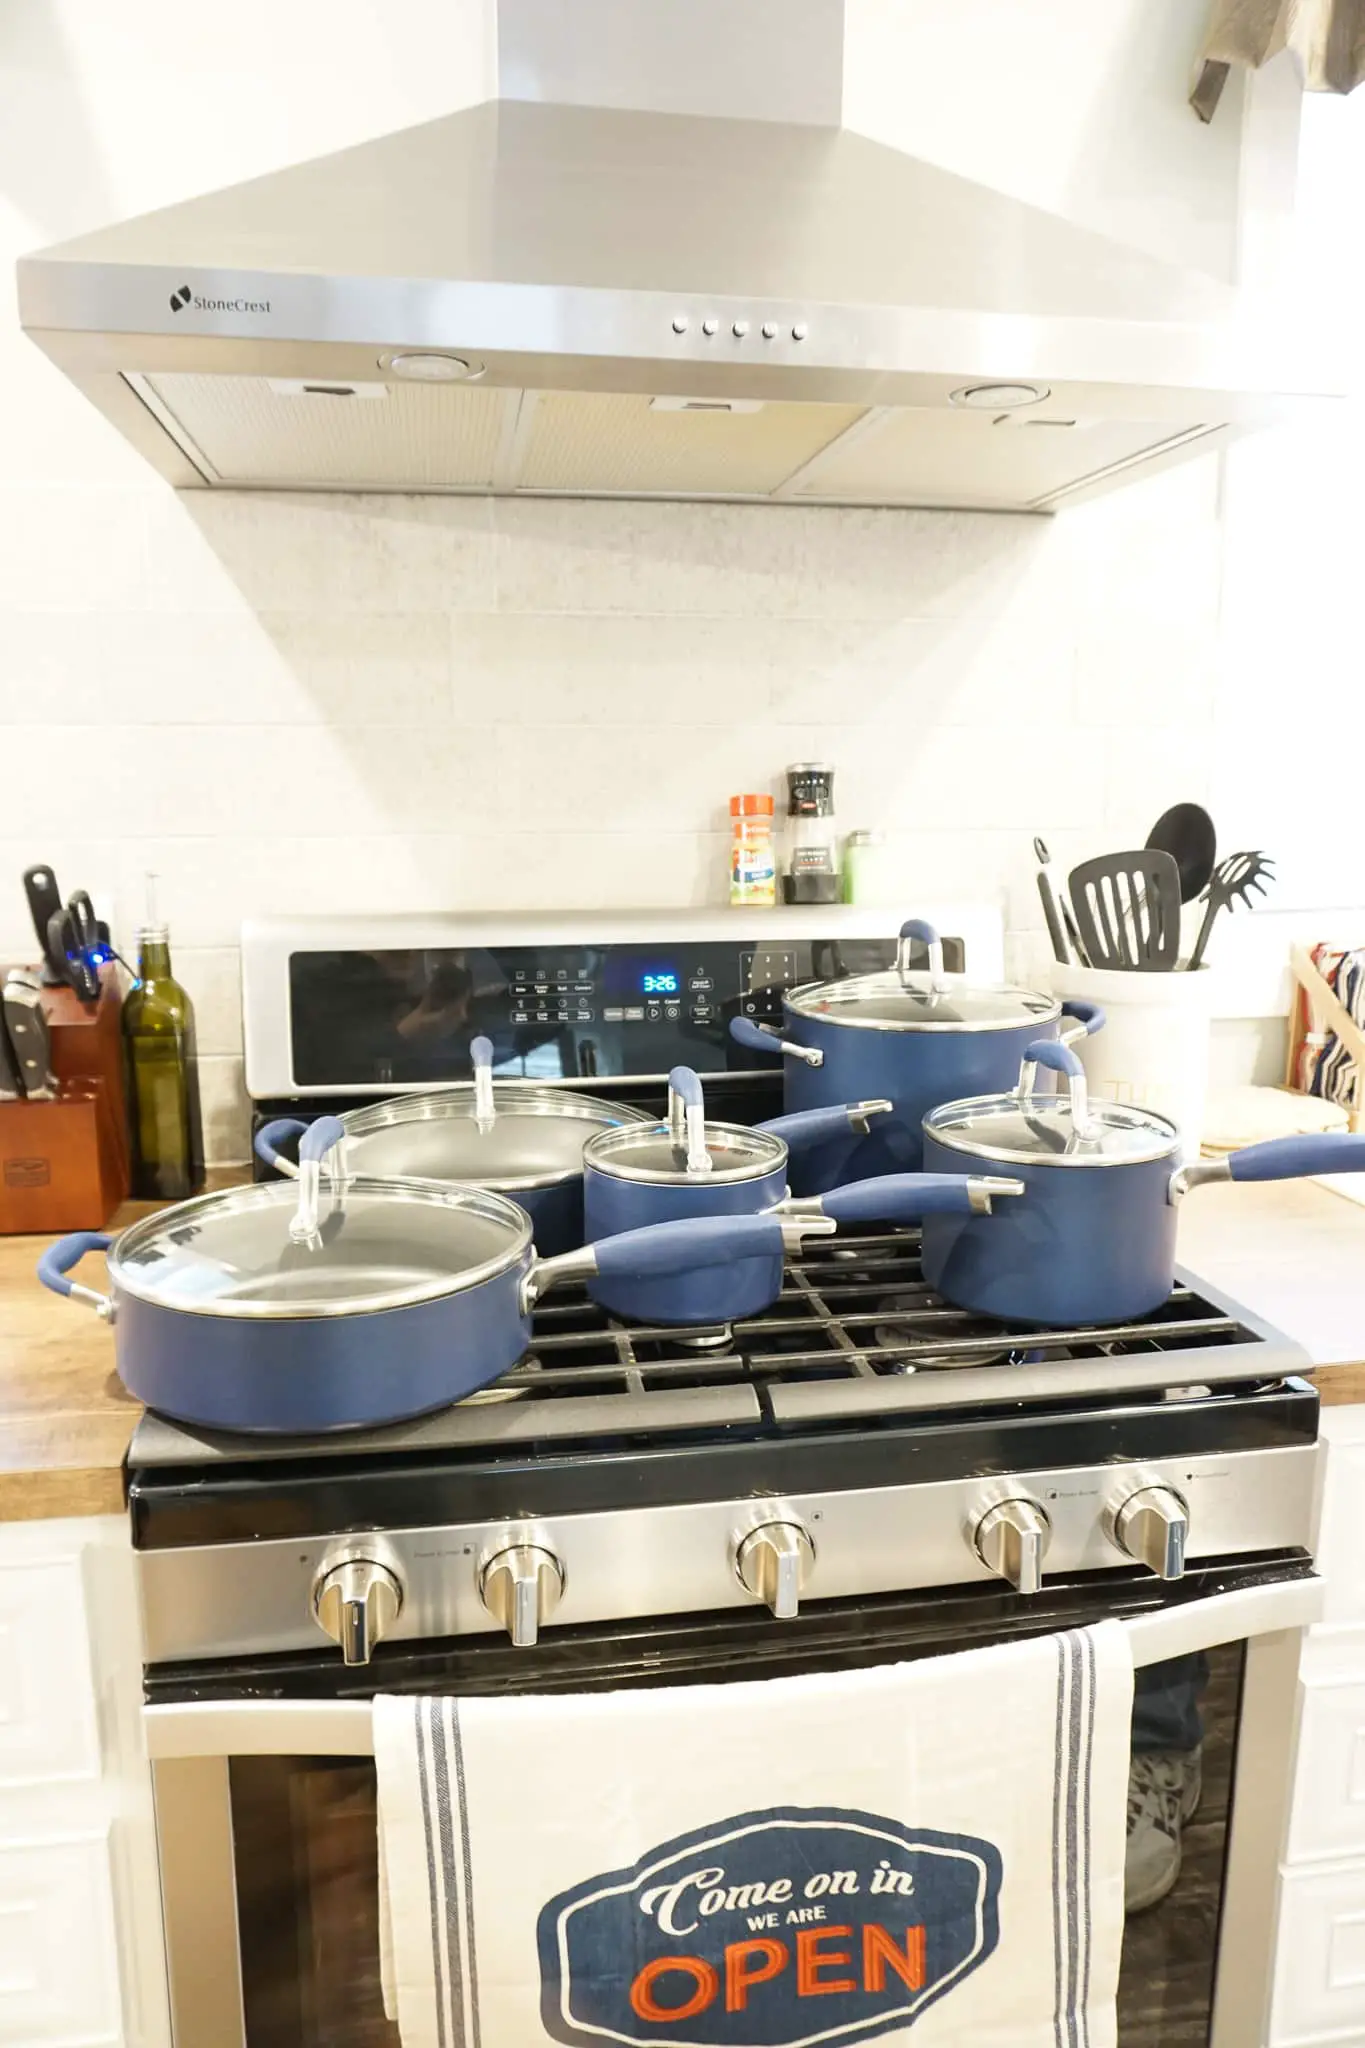 The Best Cookware Set: Anolon Advanced Home